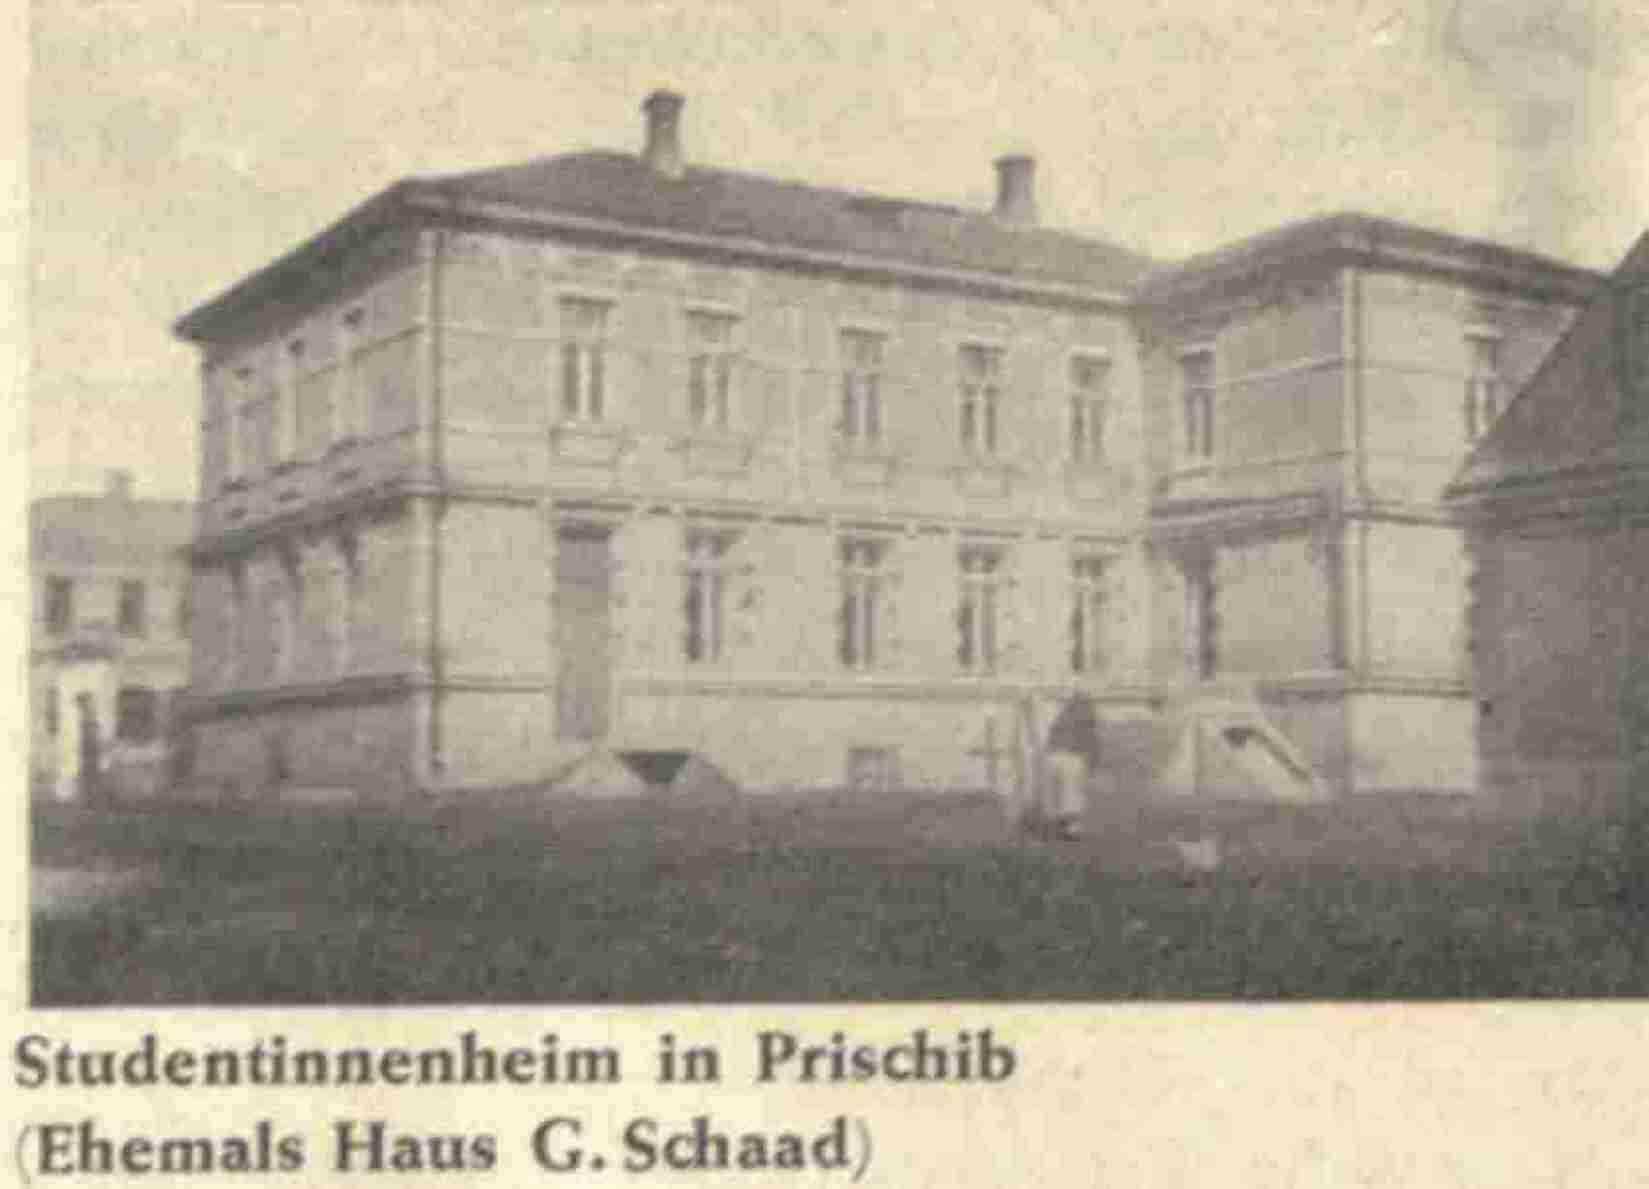 Schaads Haus. Prischib, 1926 (Studentenheim).